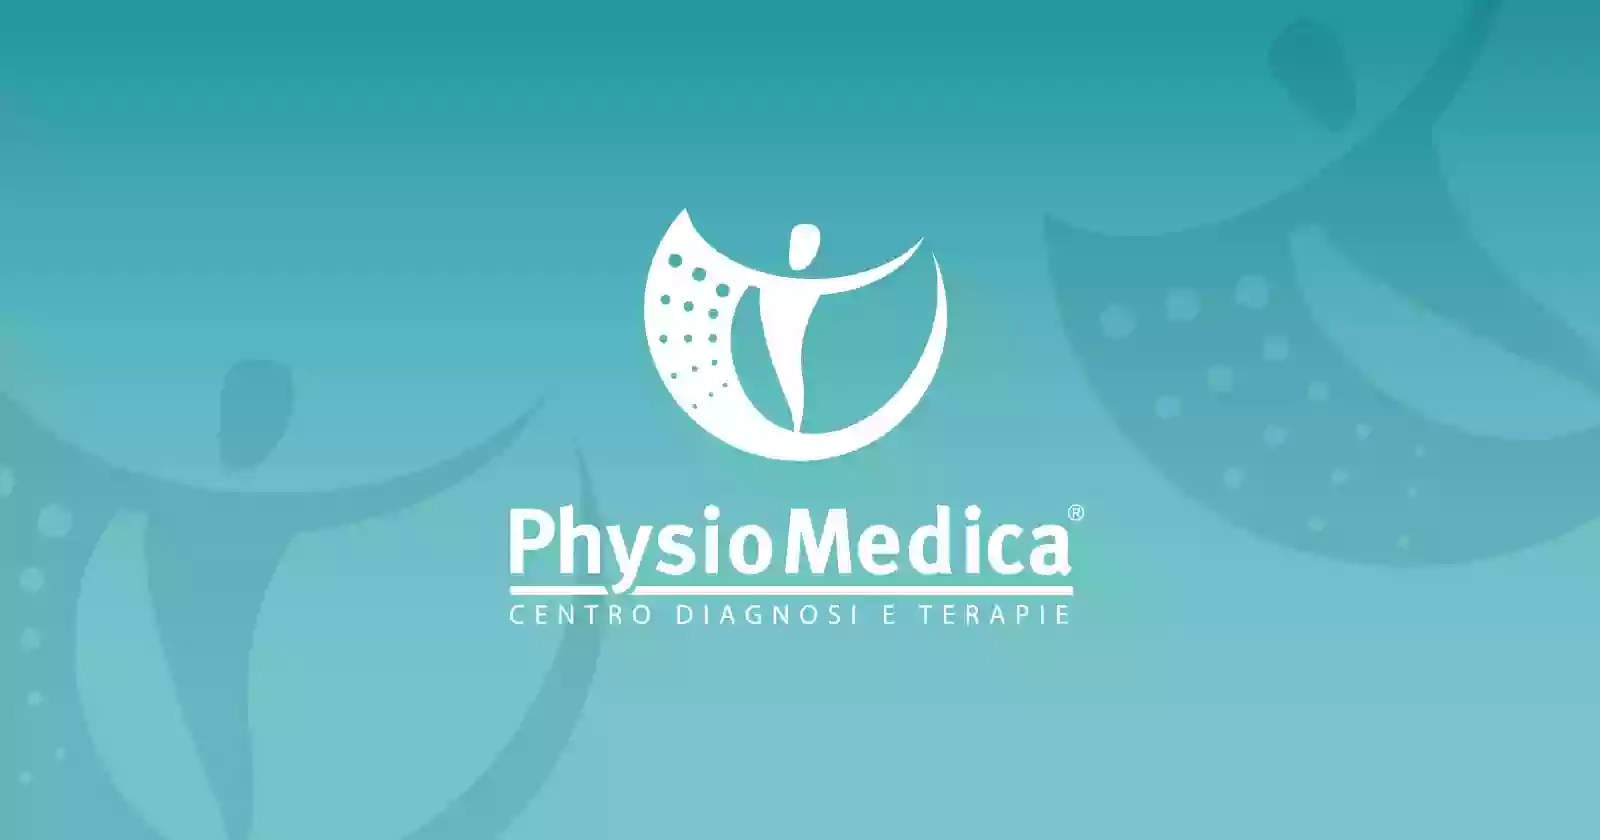 Physiomedica